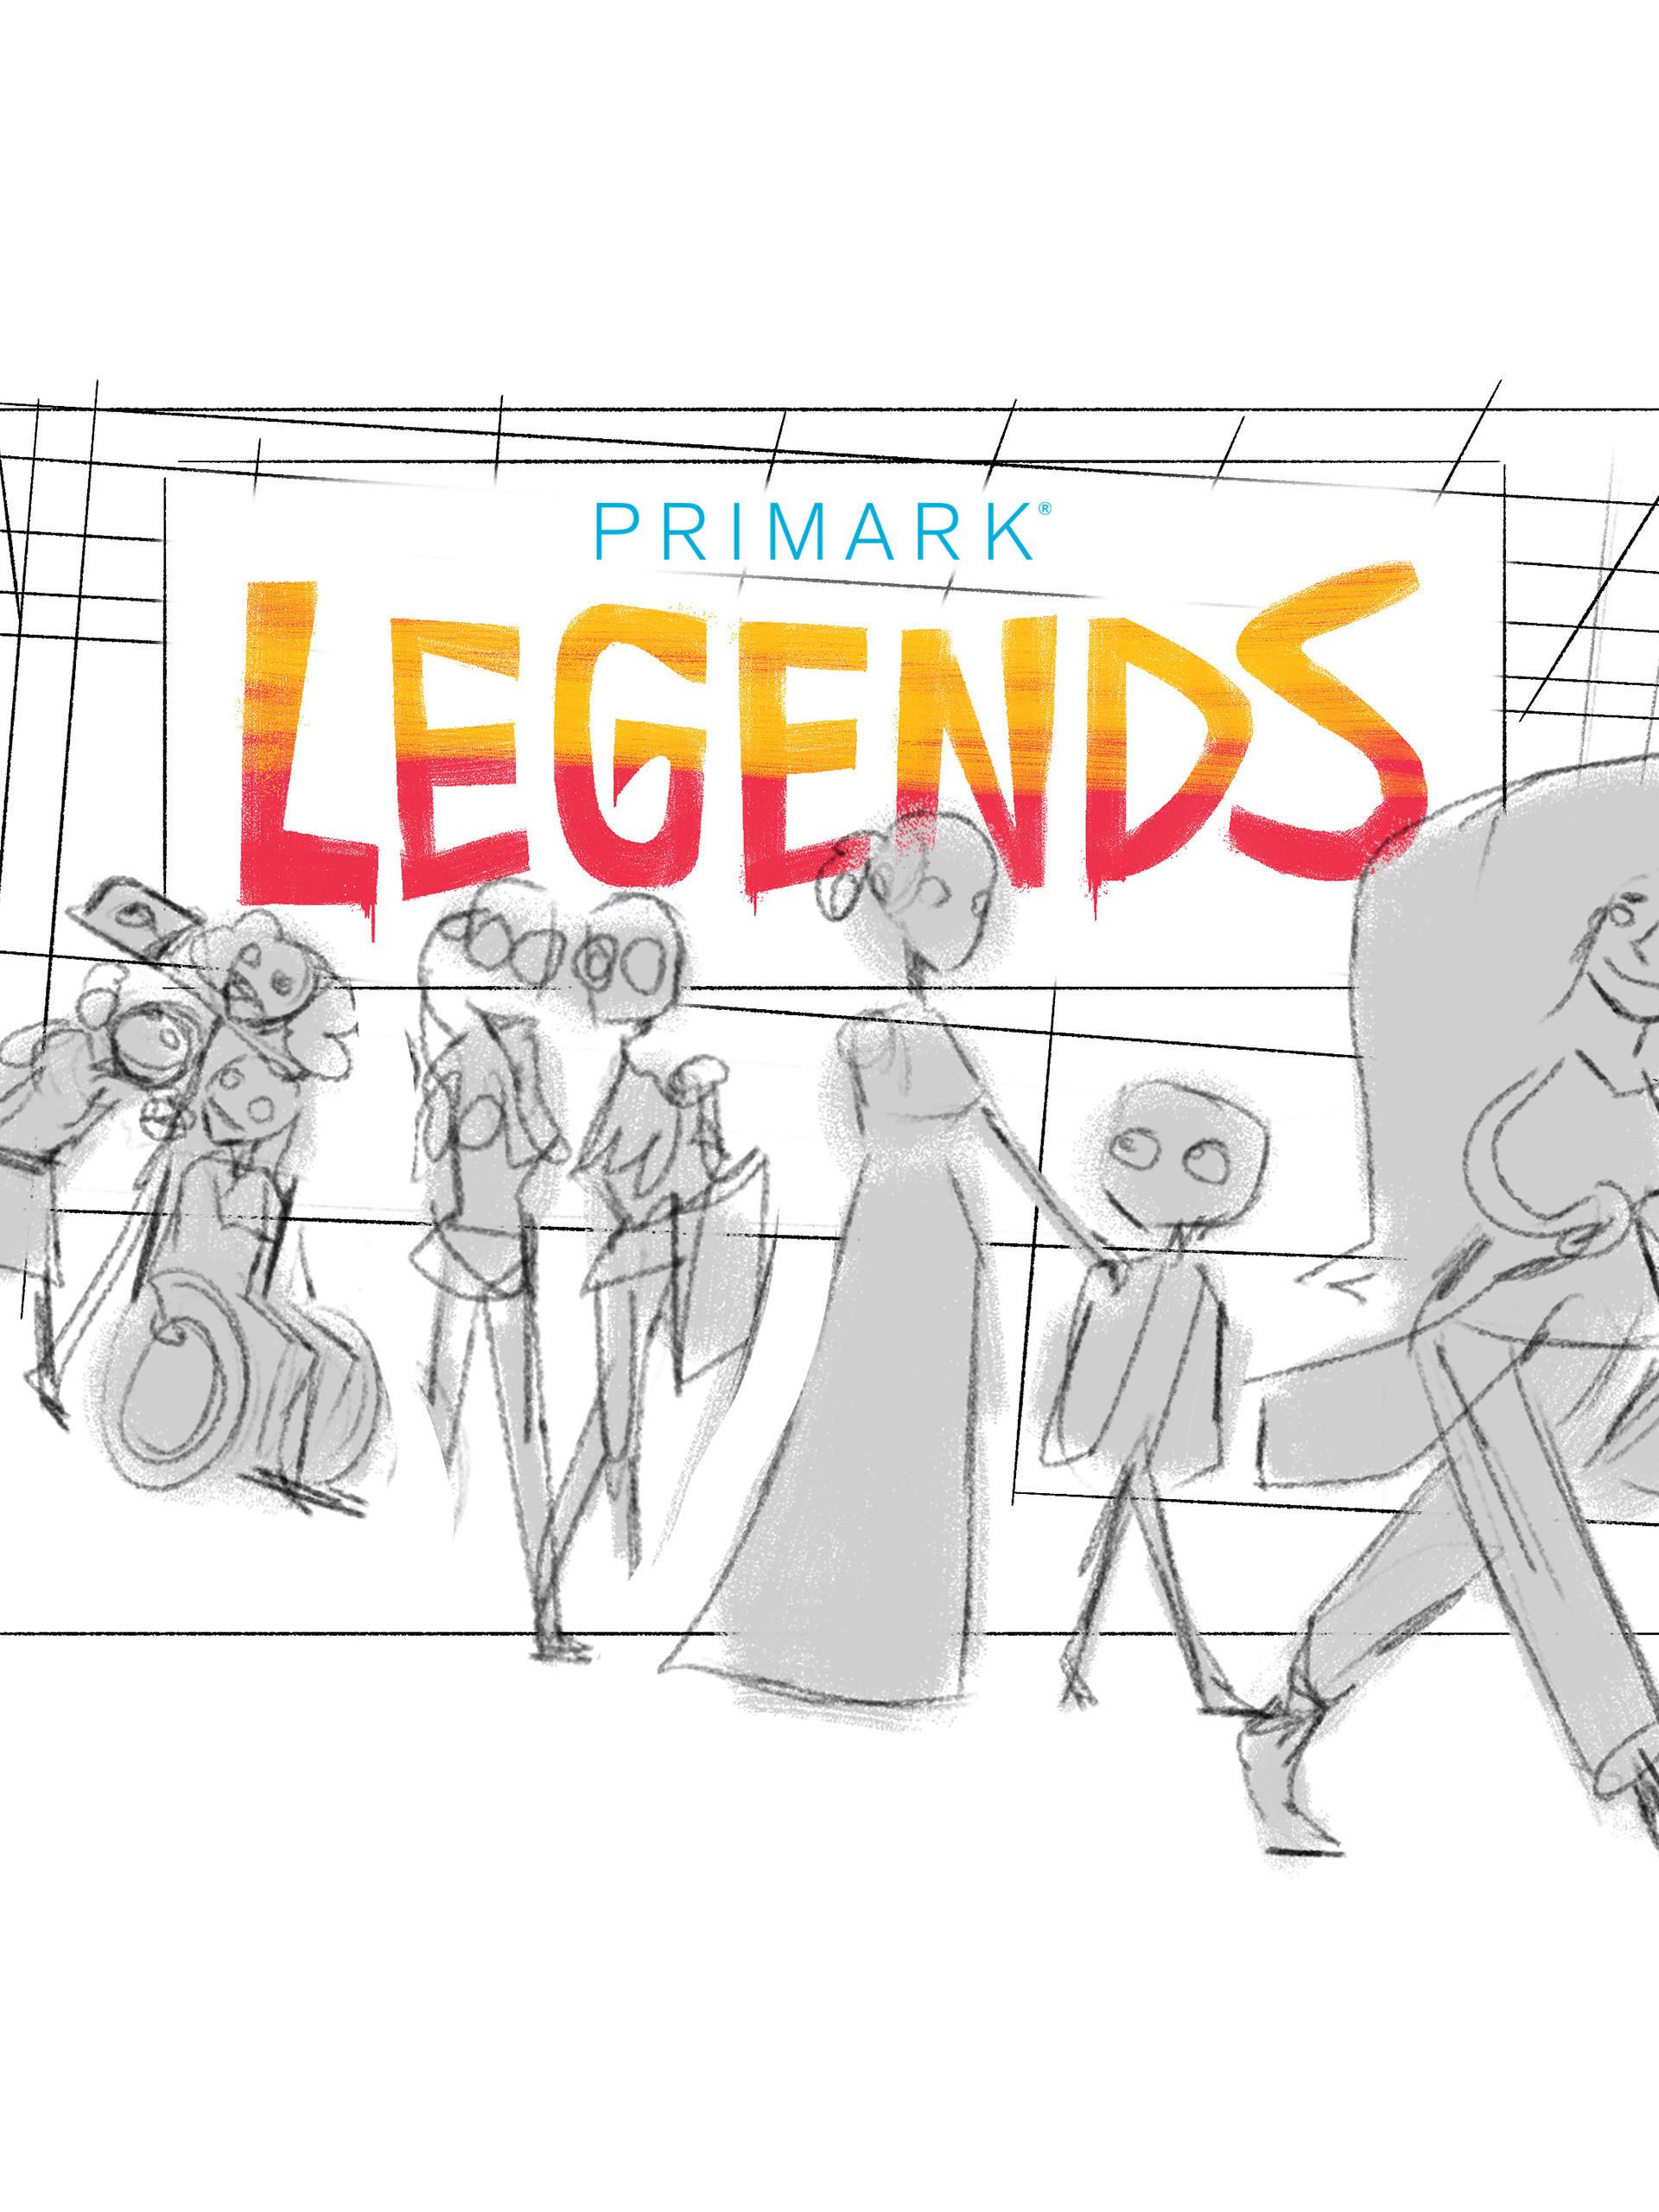 Introducing: Primark Legends